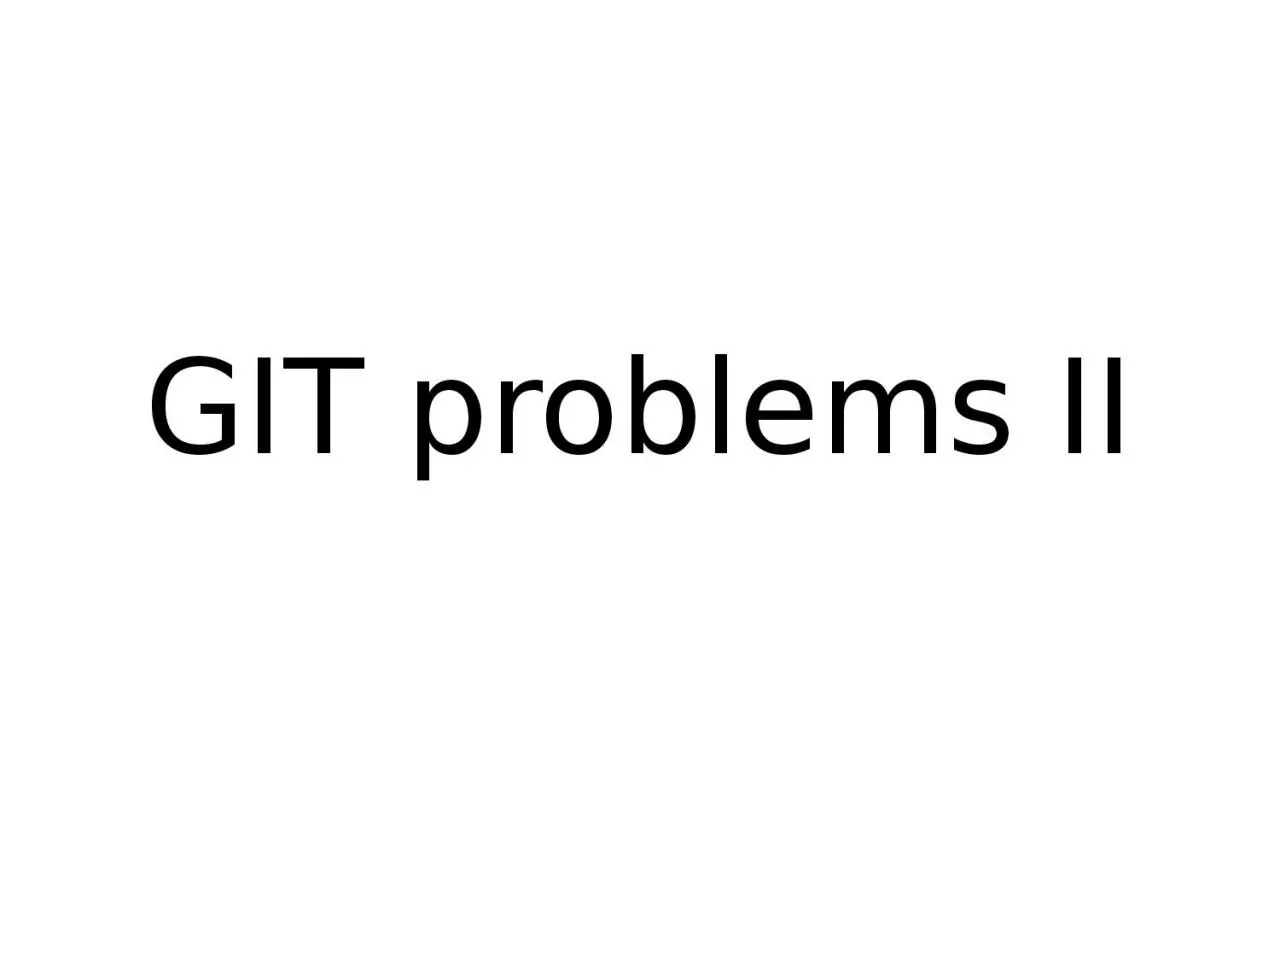 GIT problems II Hemorrhoids